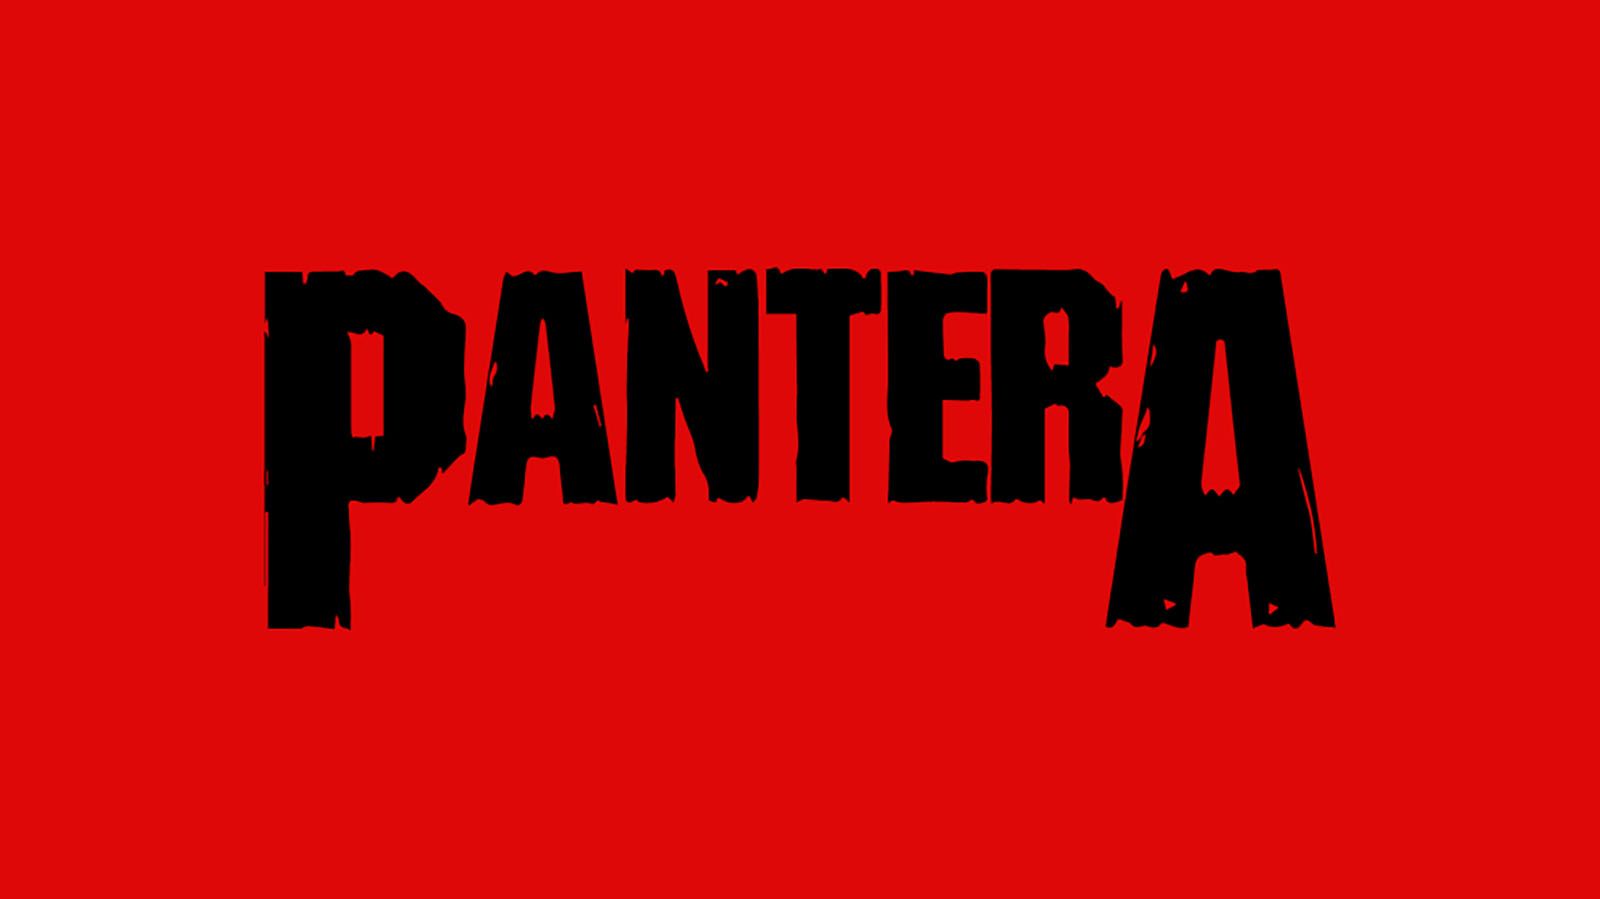 Pantera has scheduled a summer tour alongside Lamb of God.